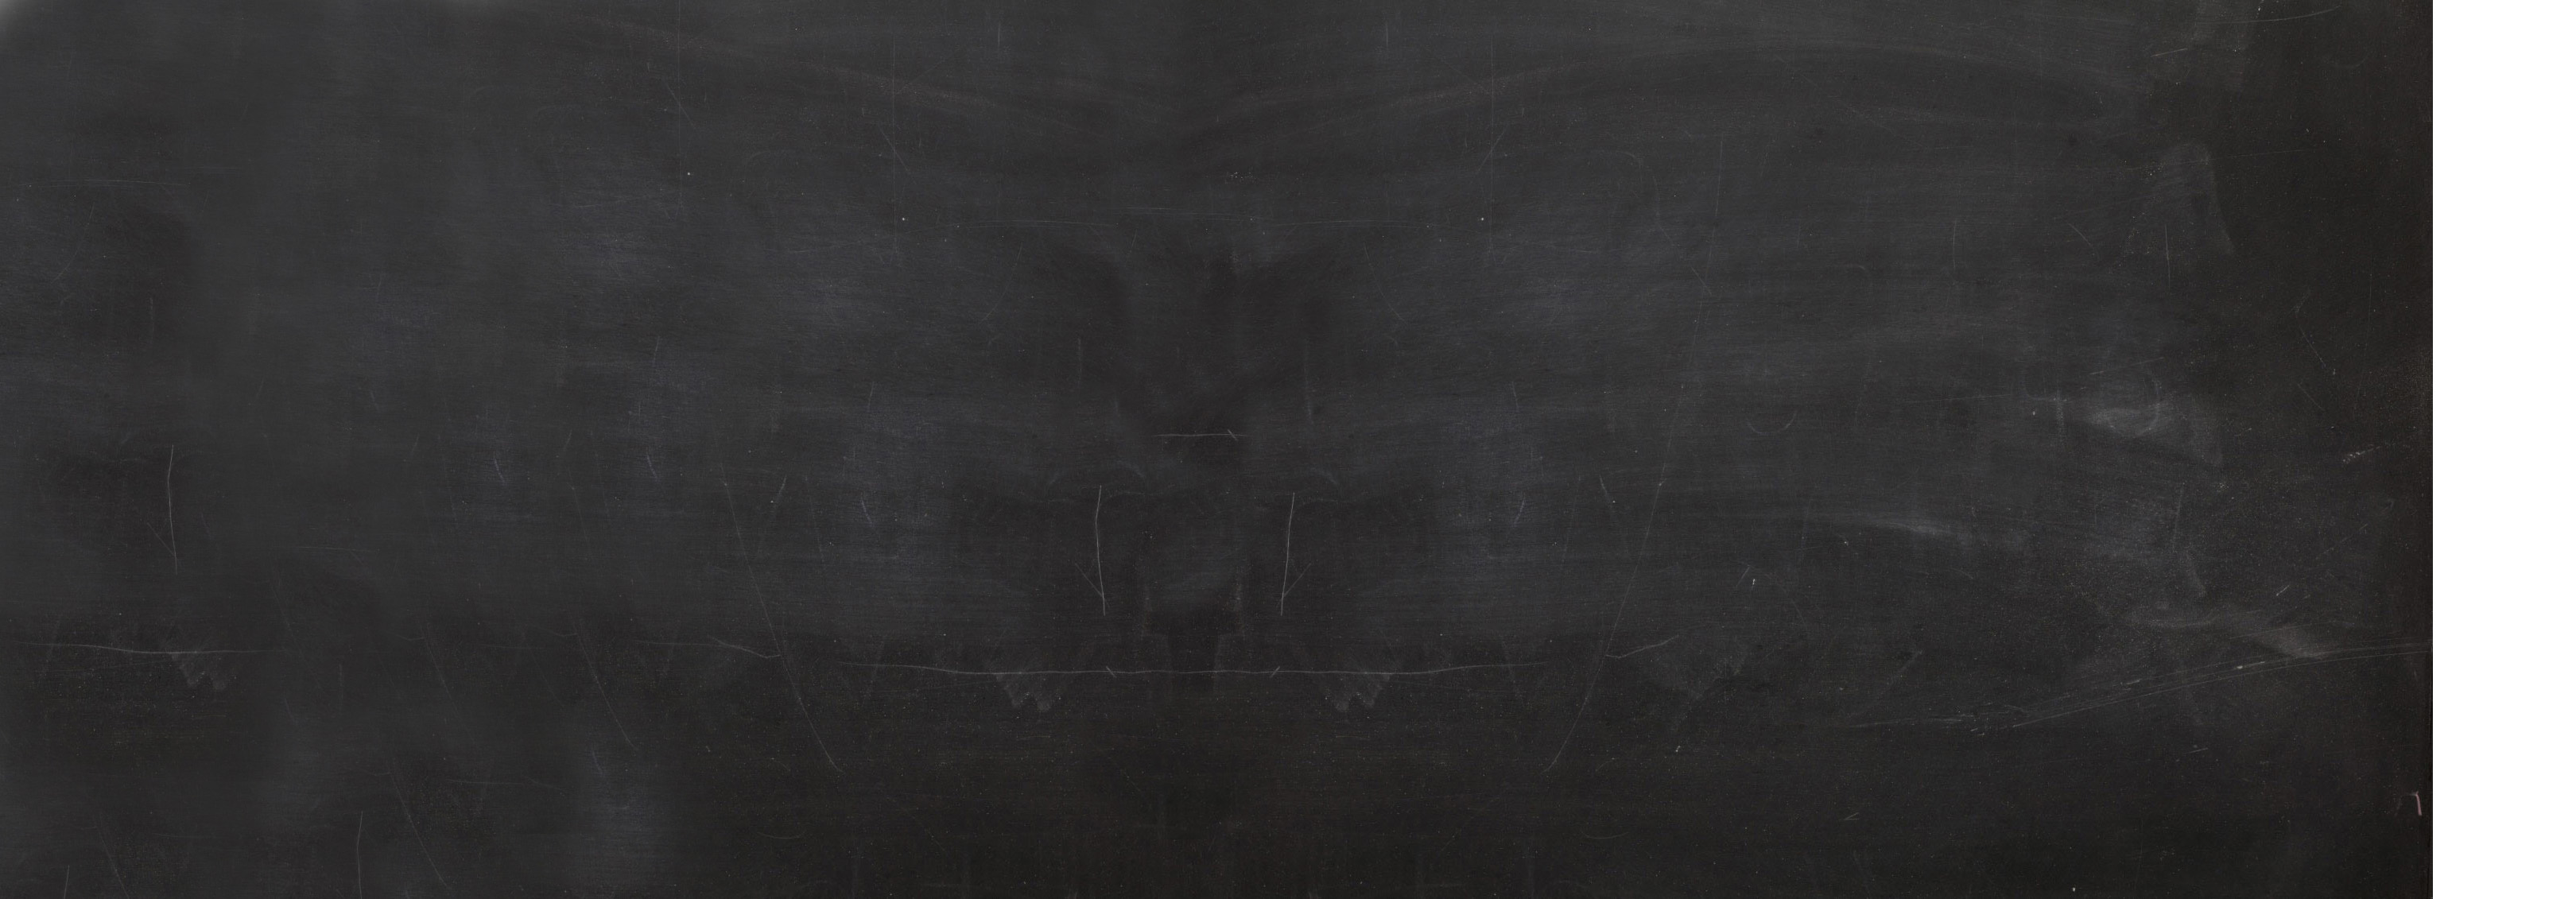 blackboard wallpaper,black,brown,darkness,atmosphere,blackboard